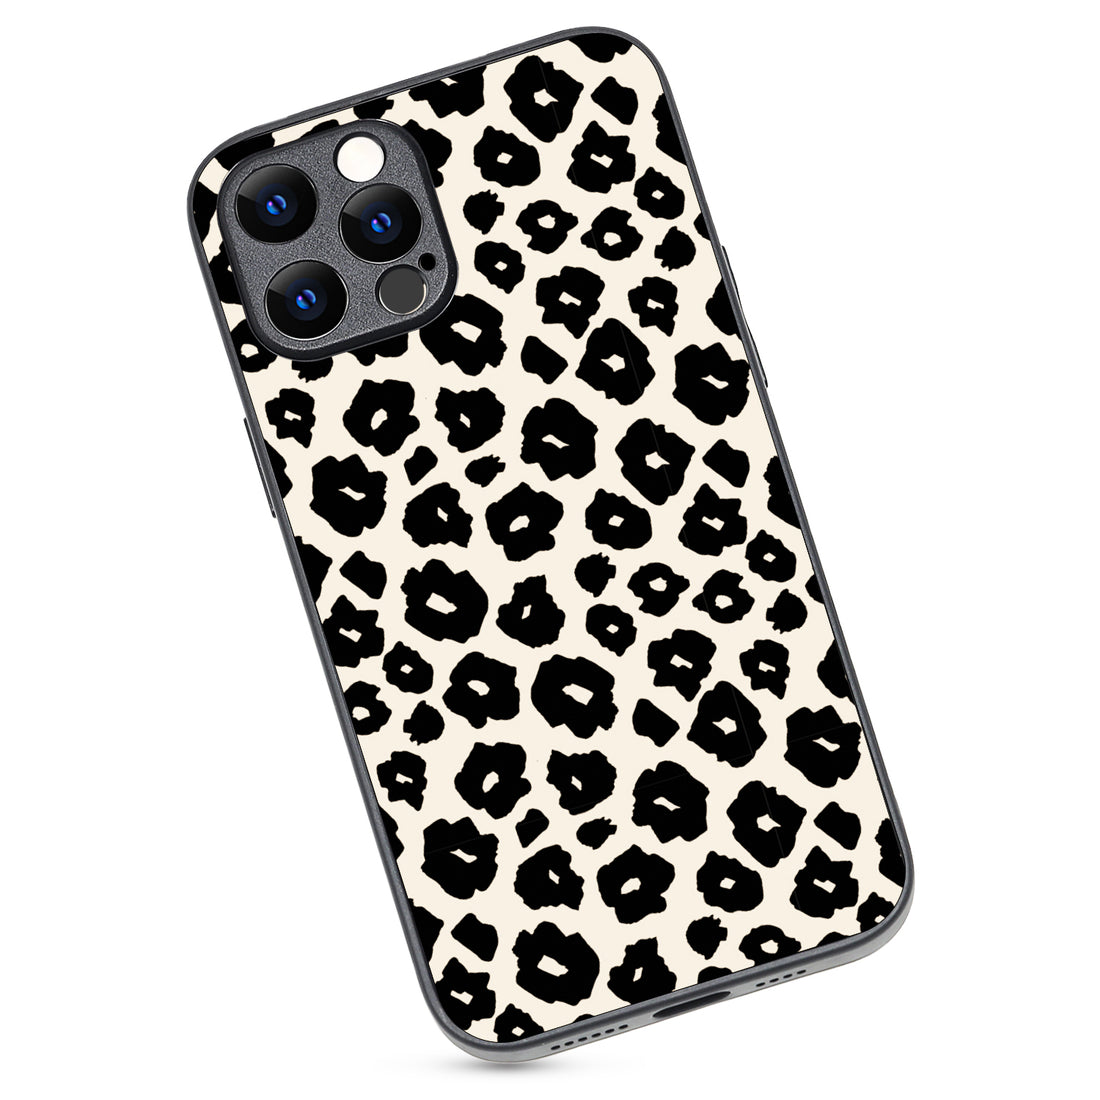 Leopard Animal Print iPhone 12 Pro Max Case